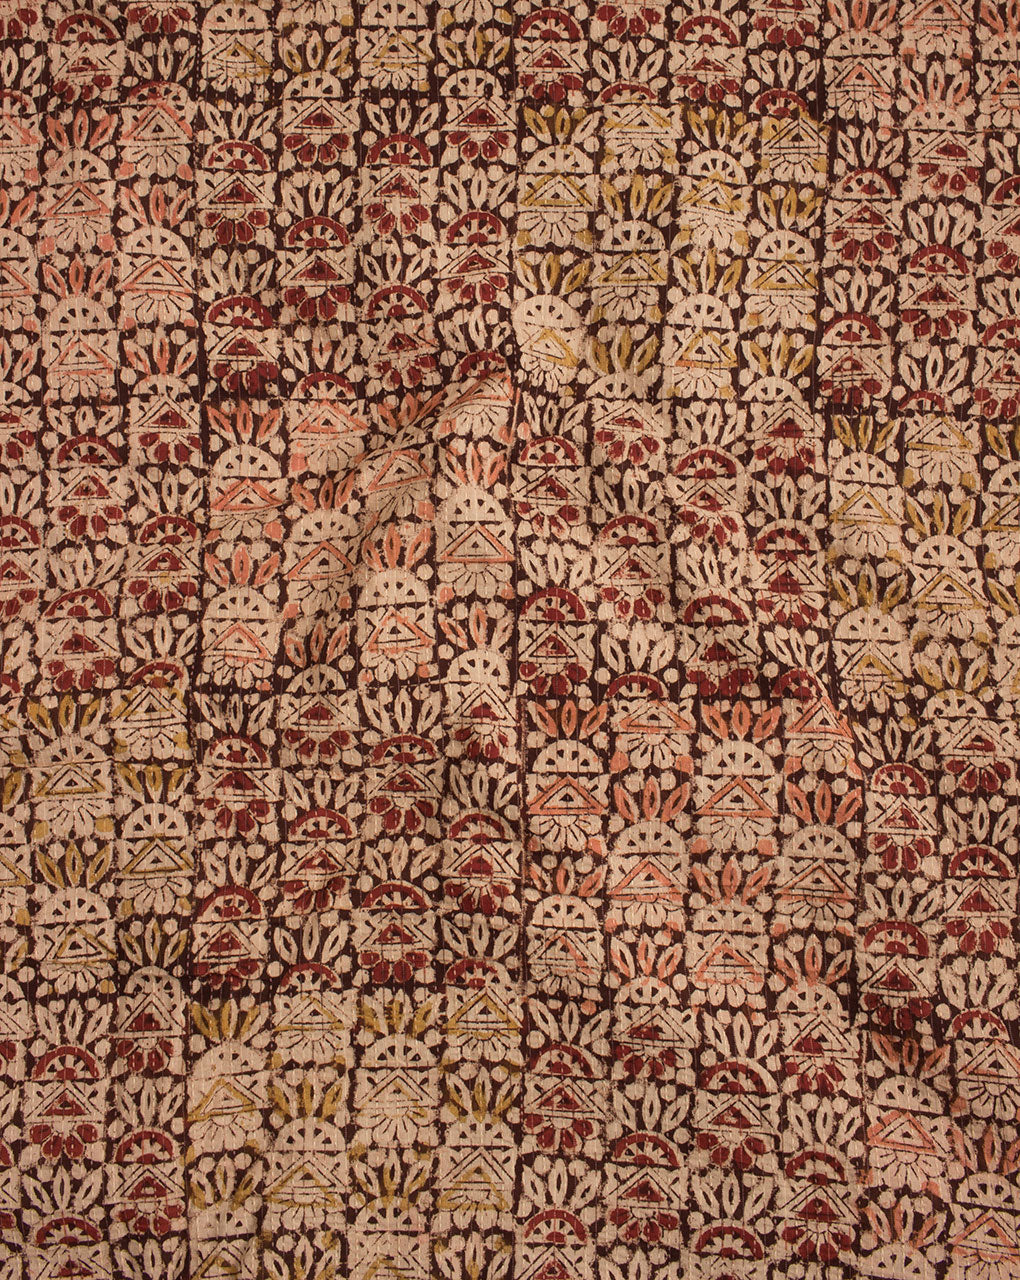 Kantha Kalamkari Hand Block Cotton Fabric - Fabriclore.com